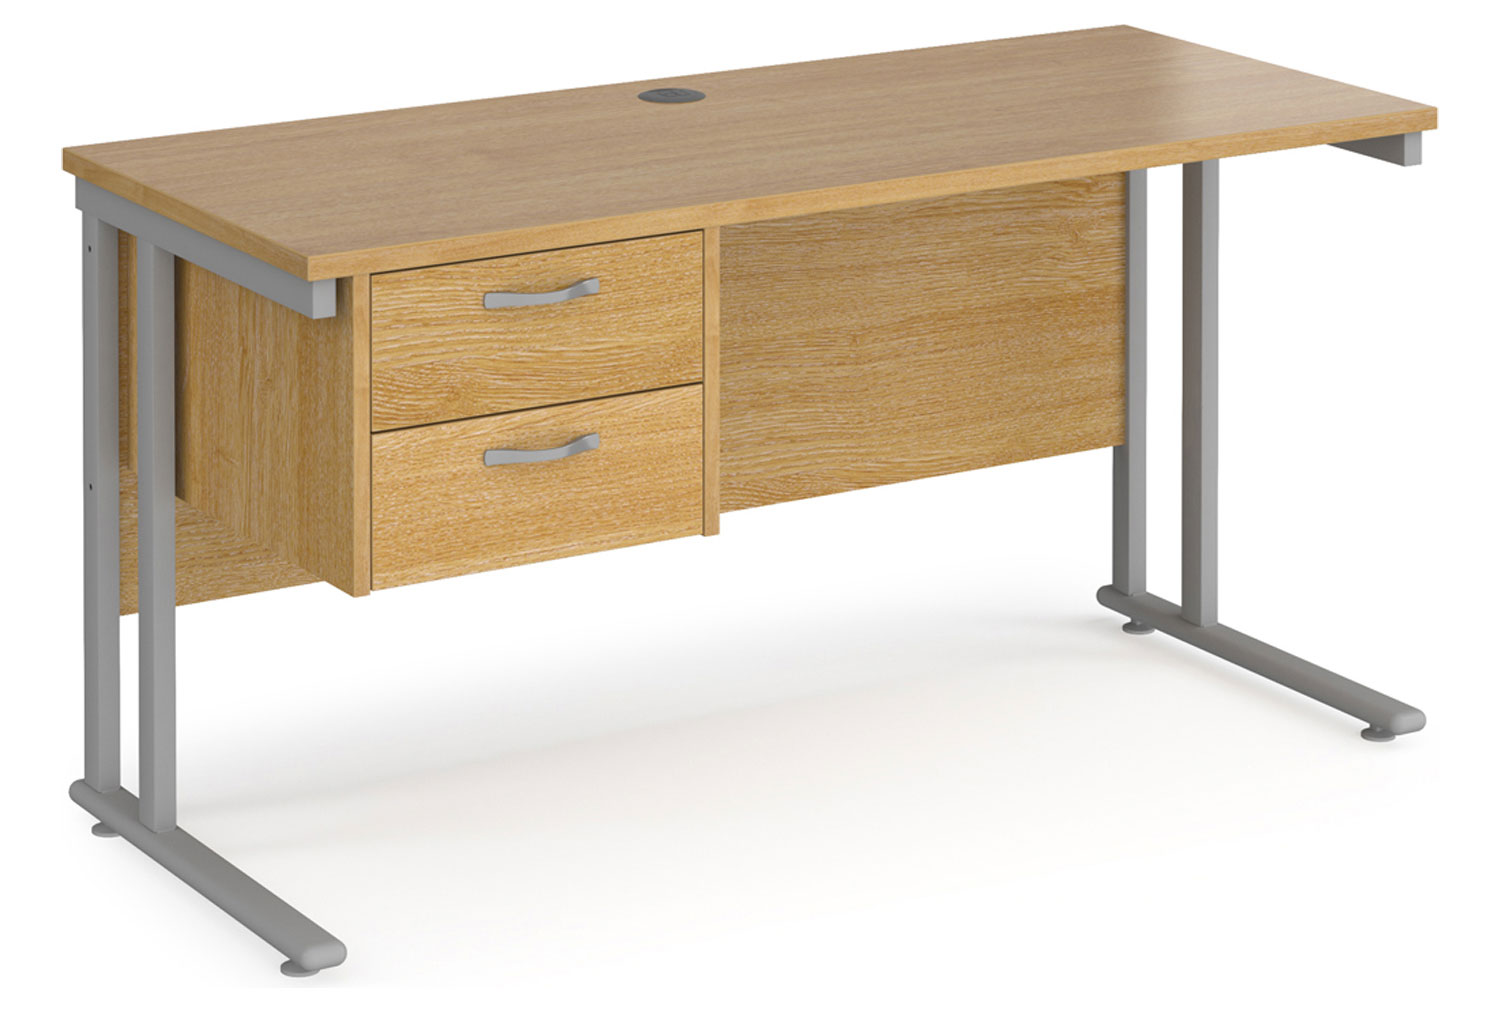 Value Line Deluxe C-Leg Narrow Rectangular Office Desk 2 Drawers (Silver Legs), 140wx60dx73h (cm), Oak